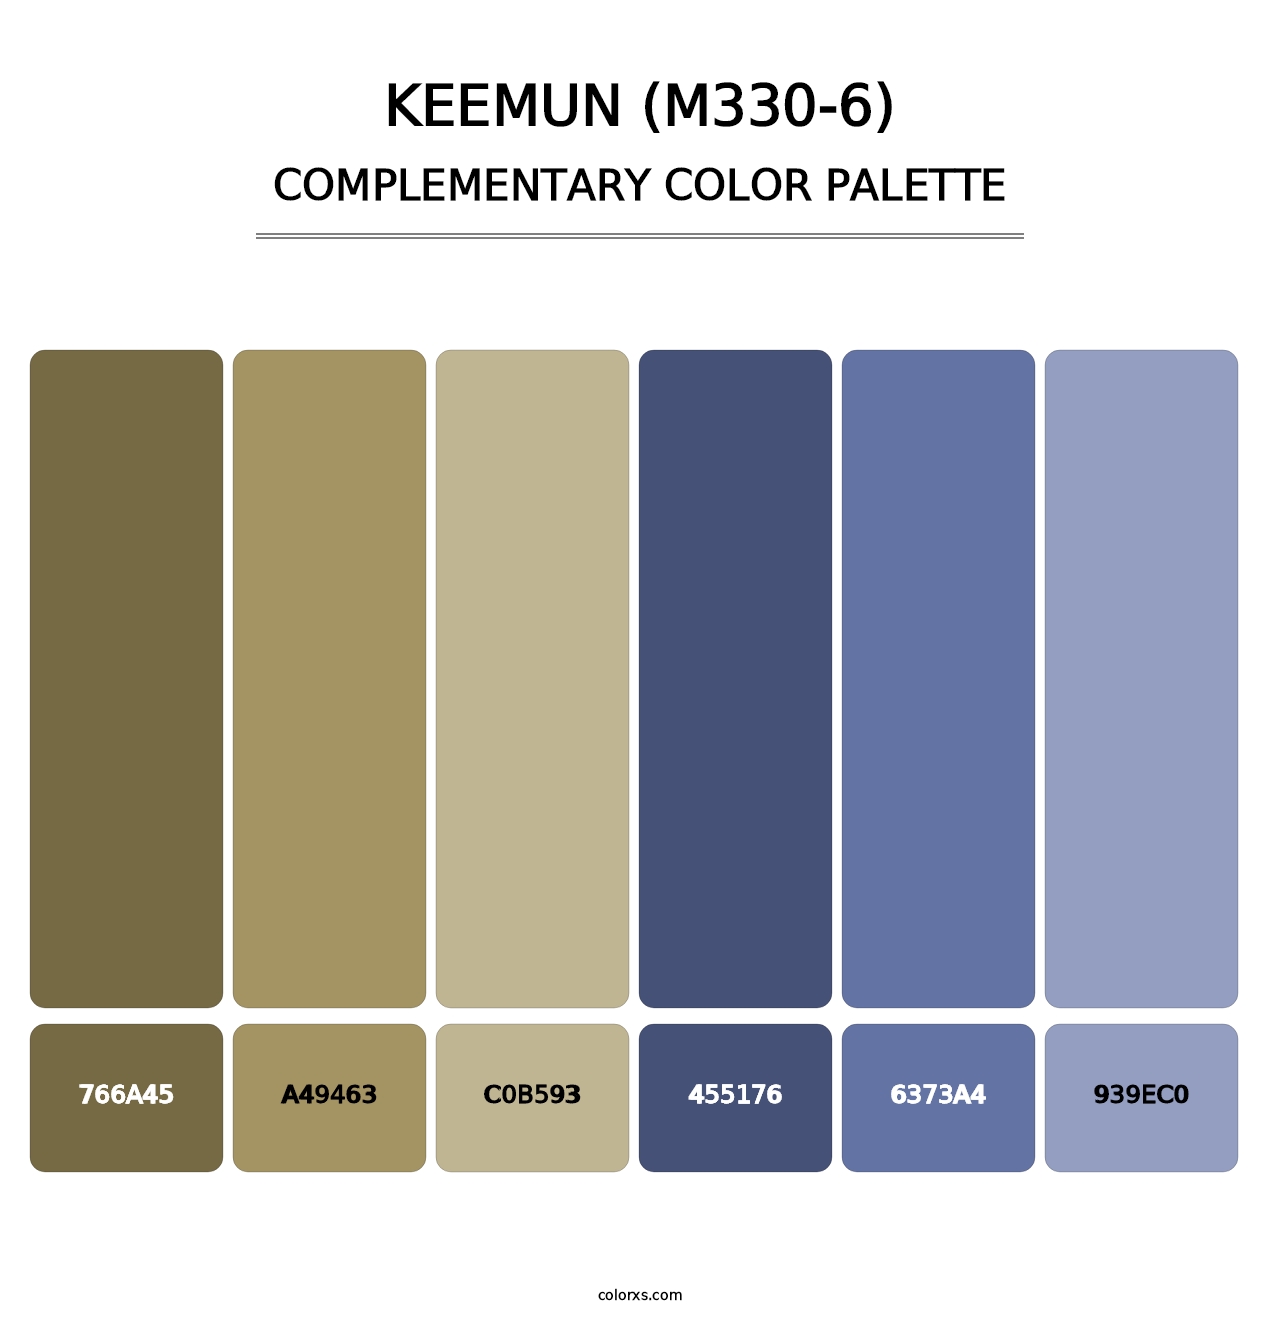 Keemun (M330-6) - Complementary Color Palette